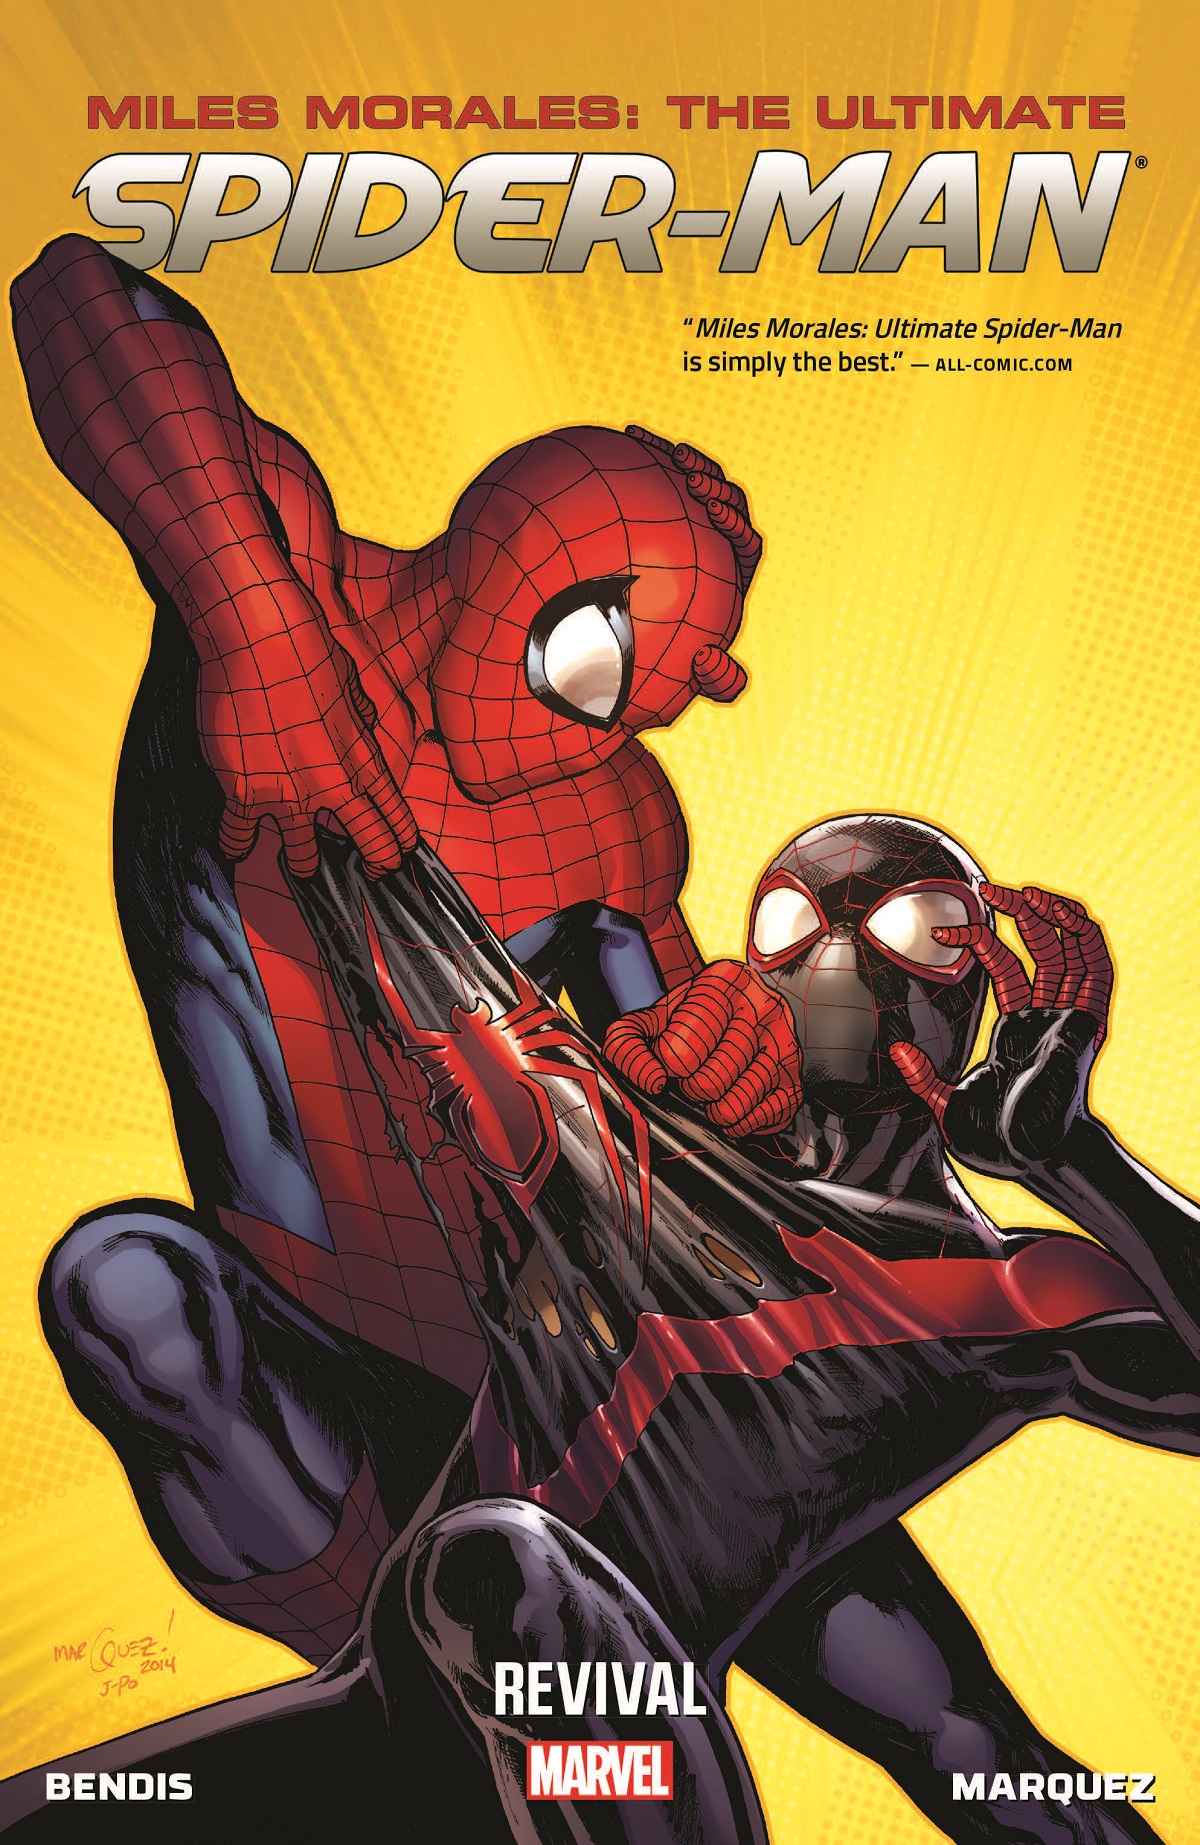 Miles Morales: Ultimate Spider-Man Vol. 1 - Revival (Trade Paperback)